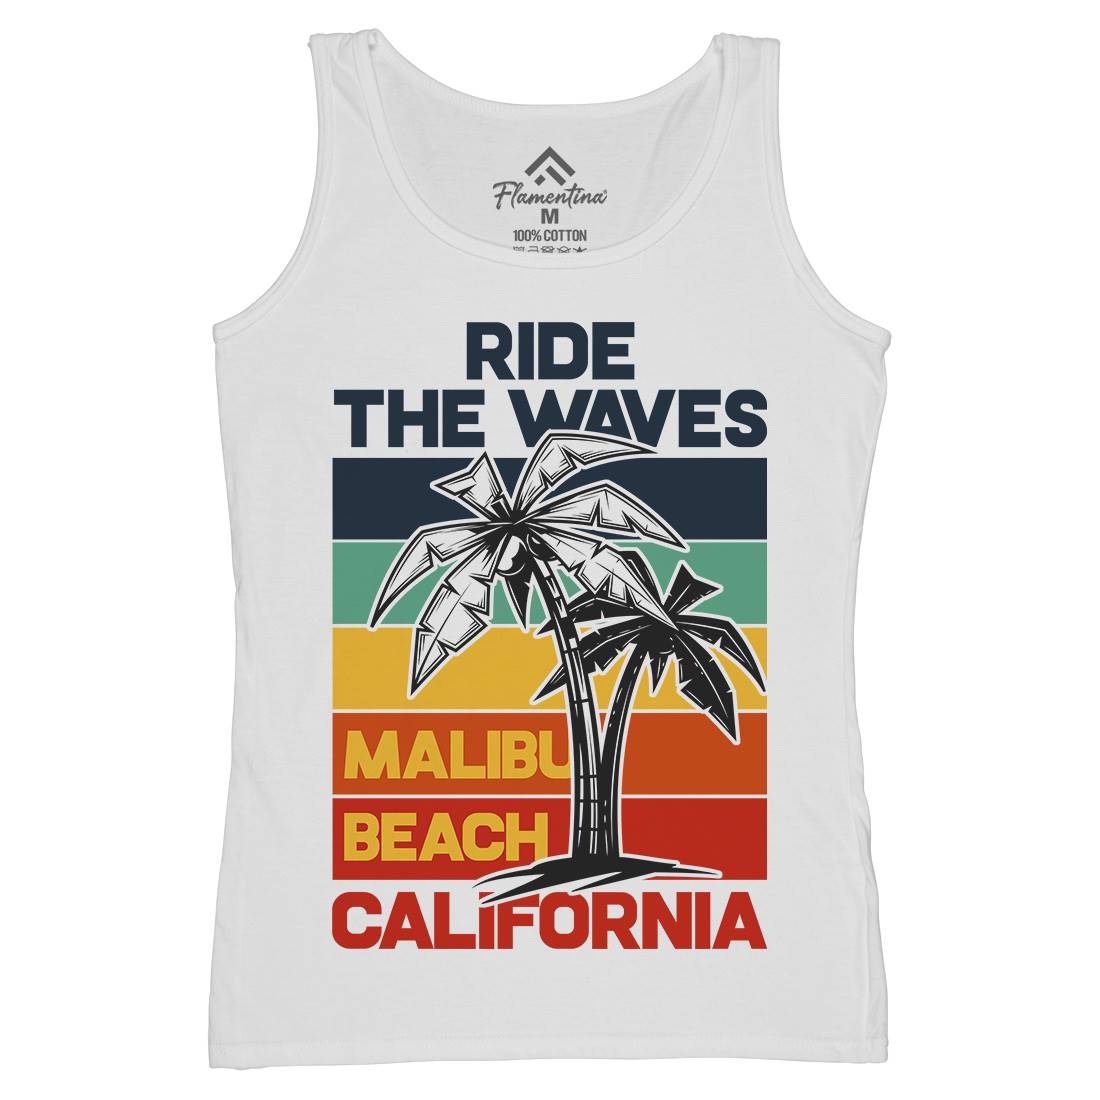 Malibu Surfing Womens Organic Tank Top Vest Surf B872